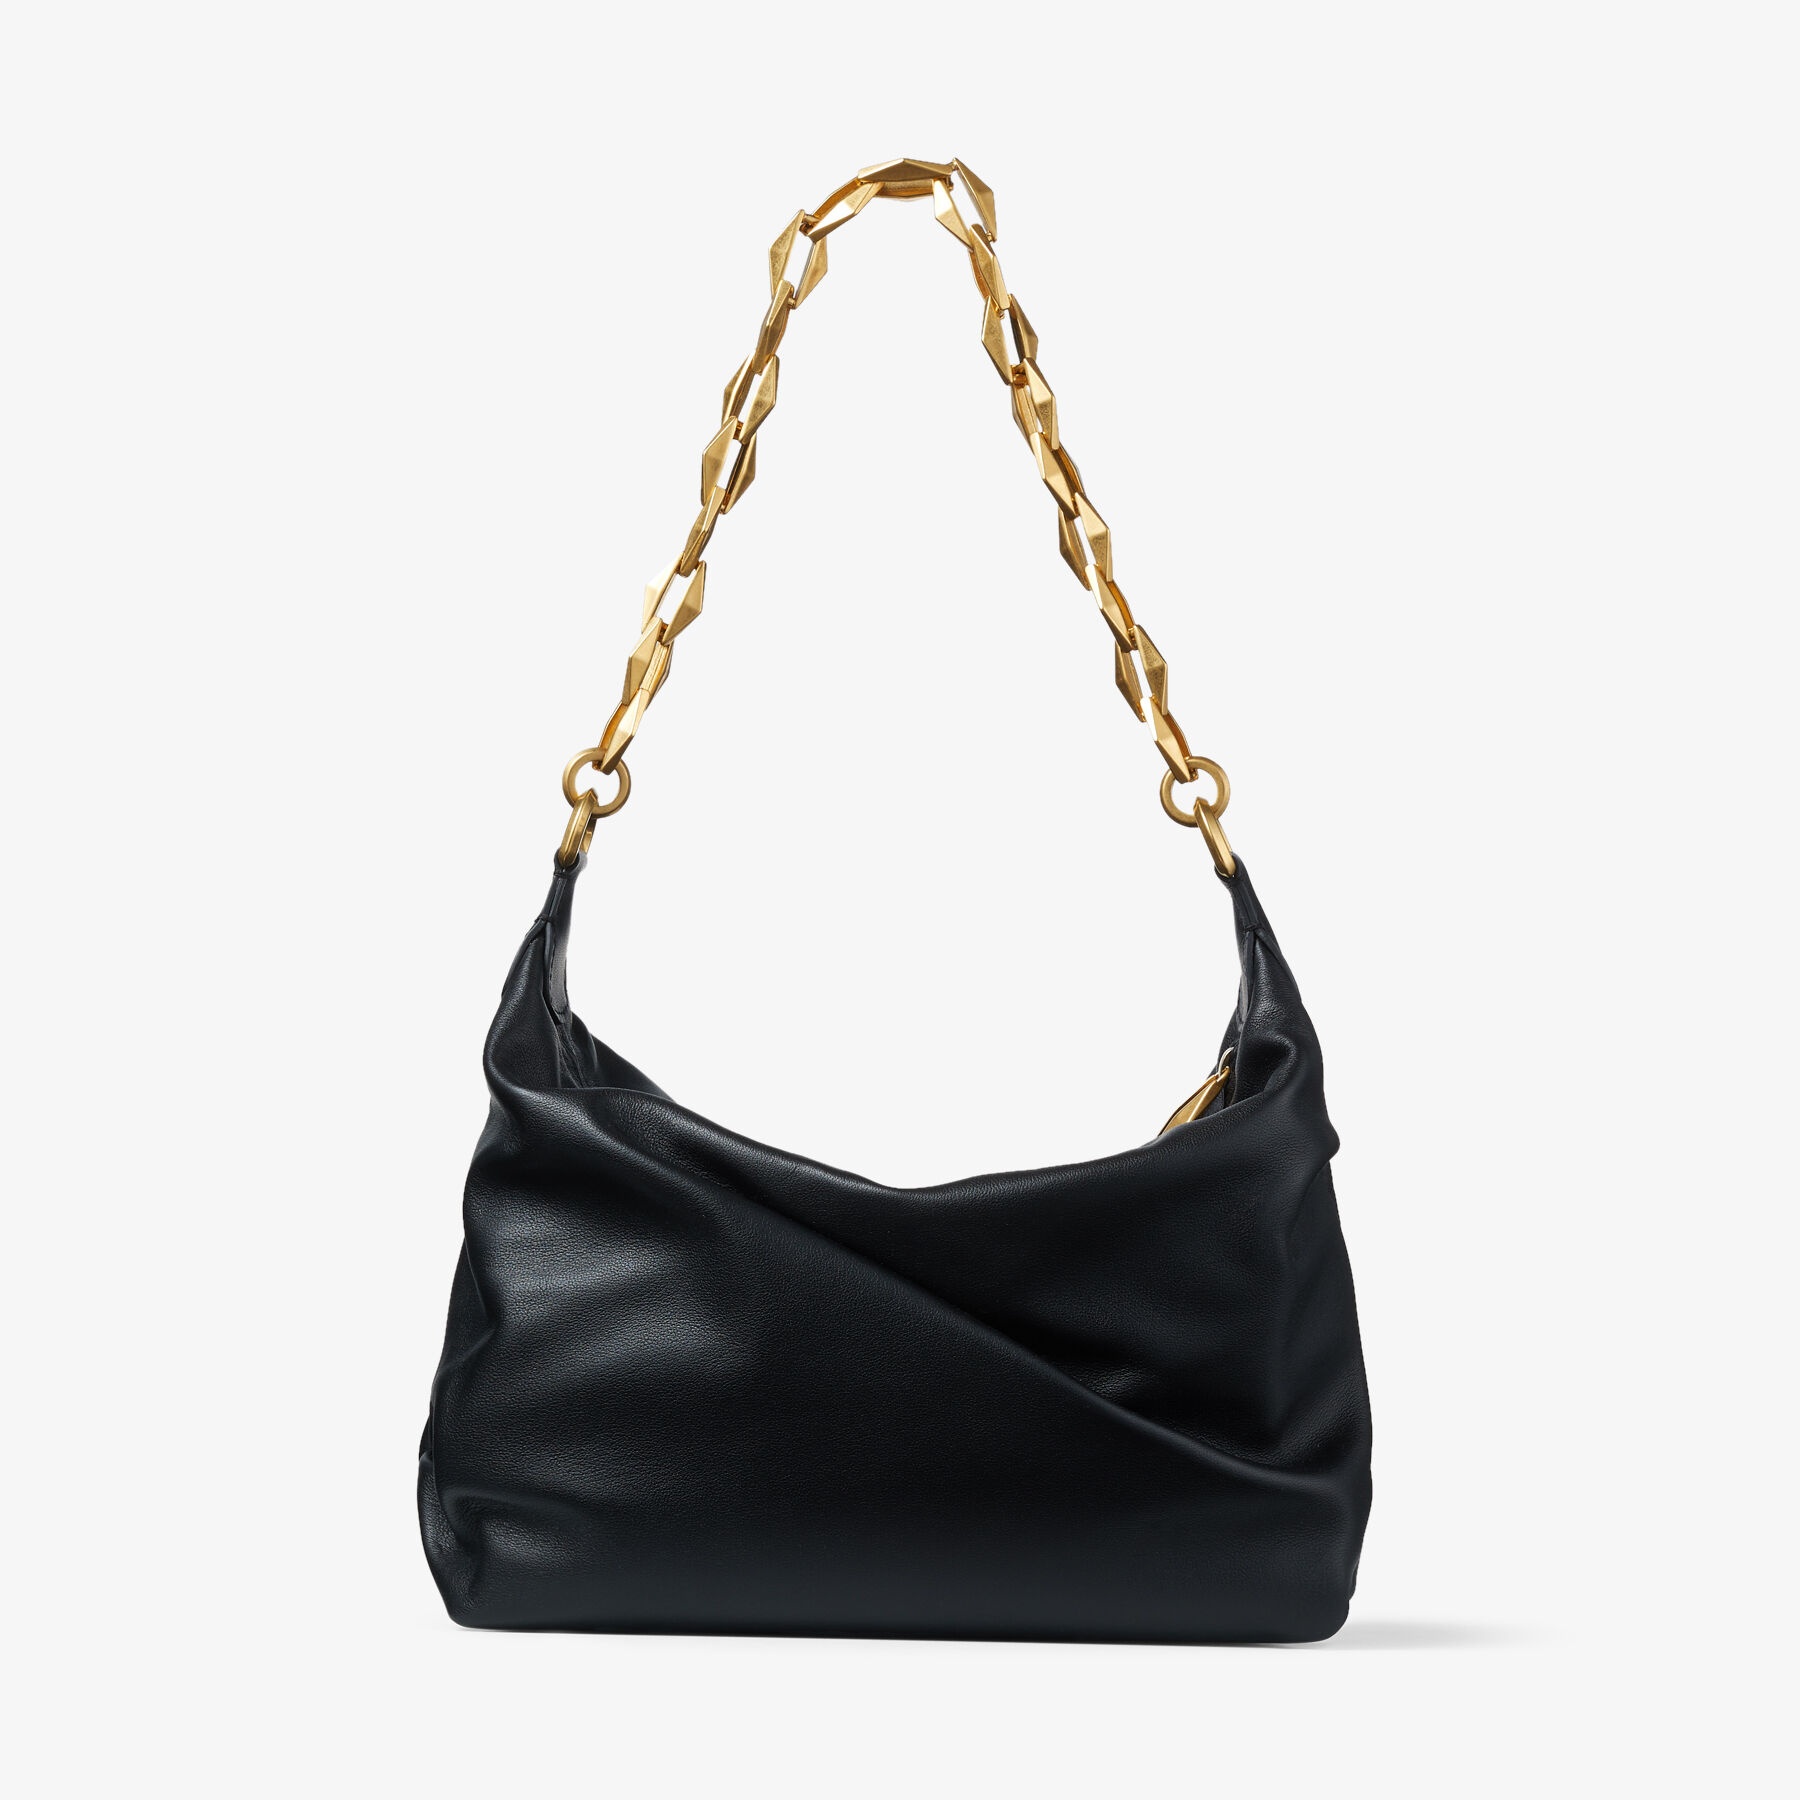 Diamond Soft Hobo S
Black Soft Calf Leather Hobo Bag with Chain Strap - 10